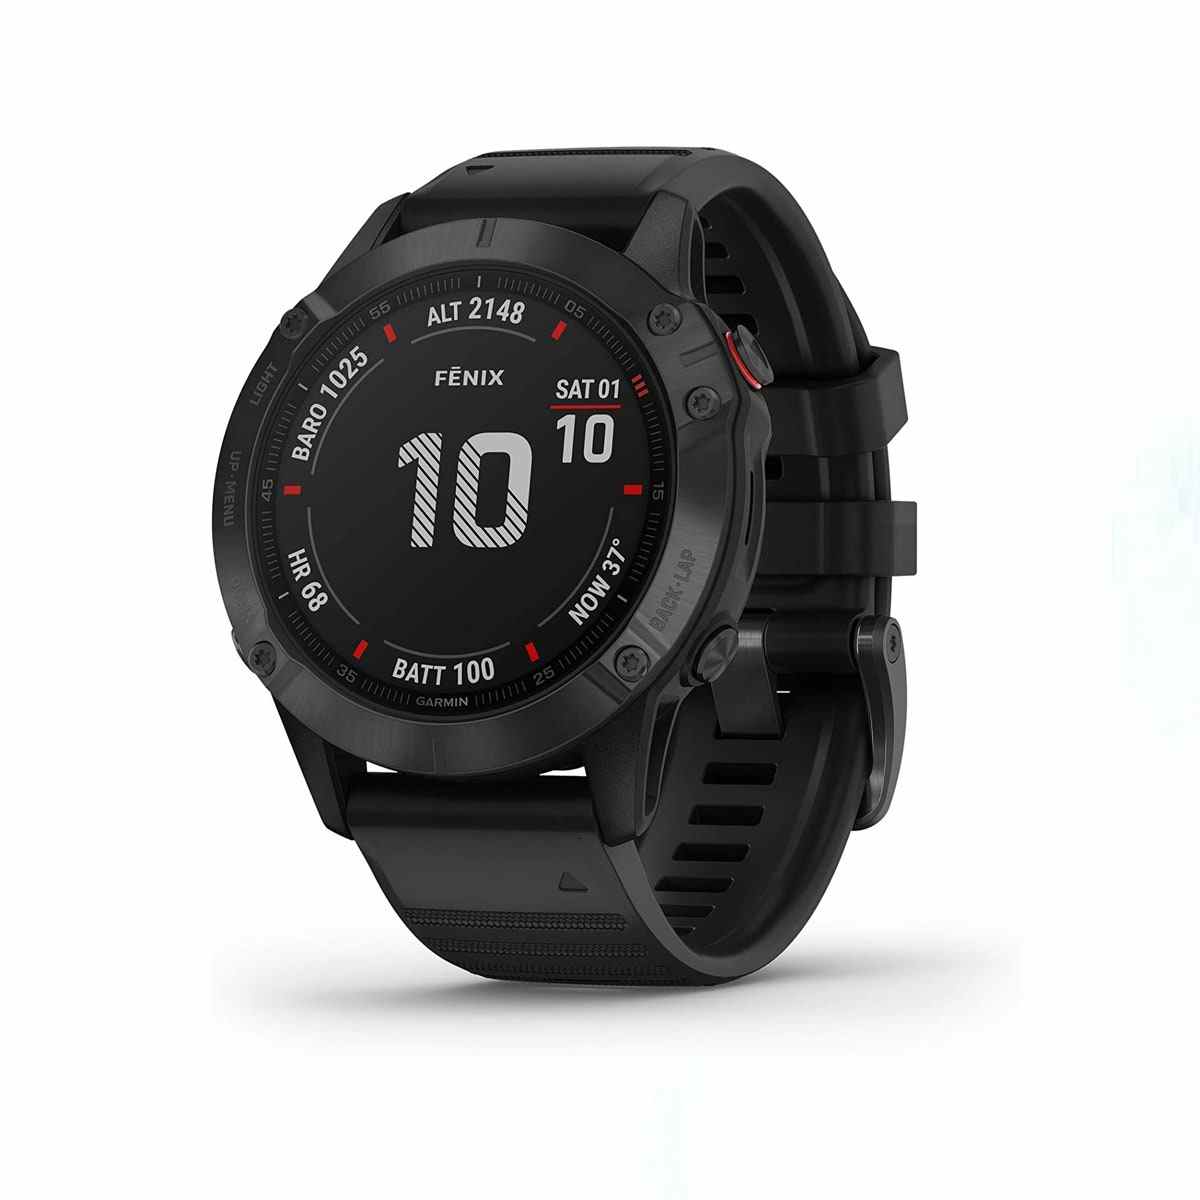 Black Garmin Fenix 6 Pro Premium Multisport GPS Watch on white background